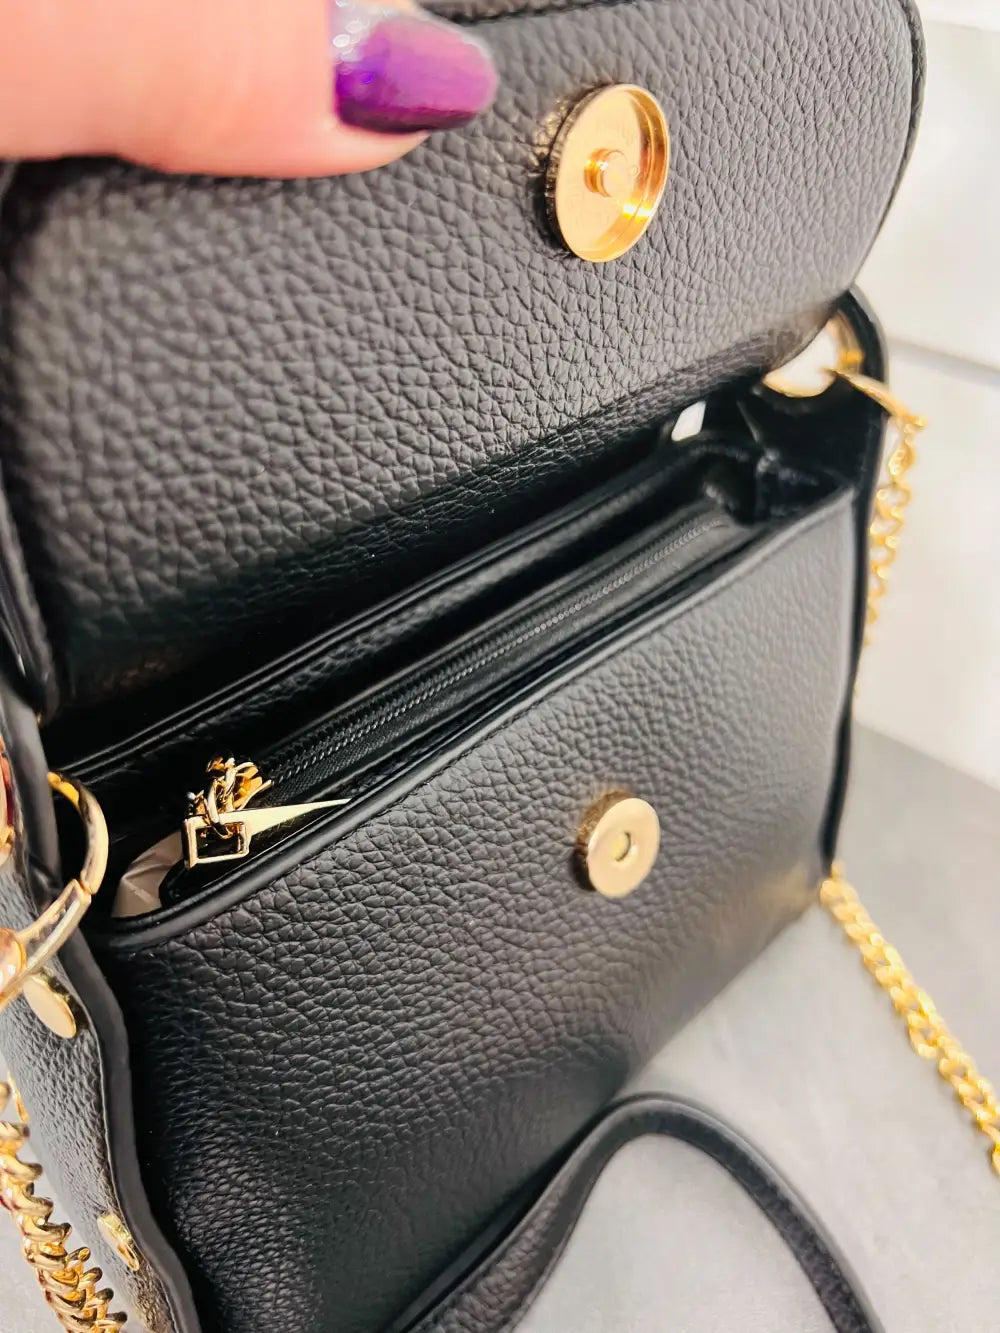 Mini Bee Chain Handbag BLACK - Handbag